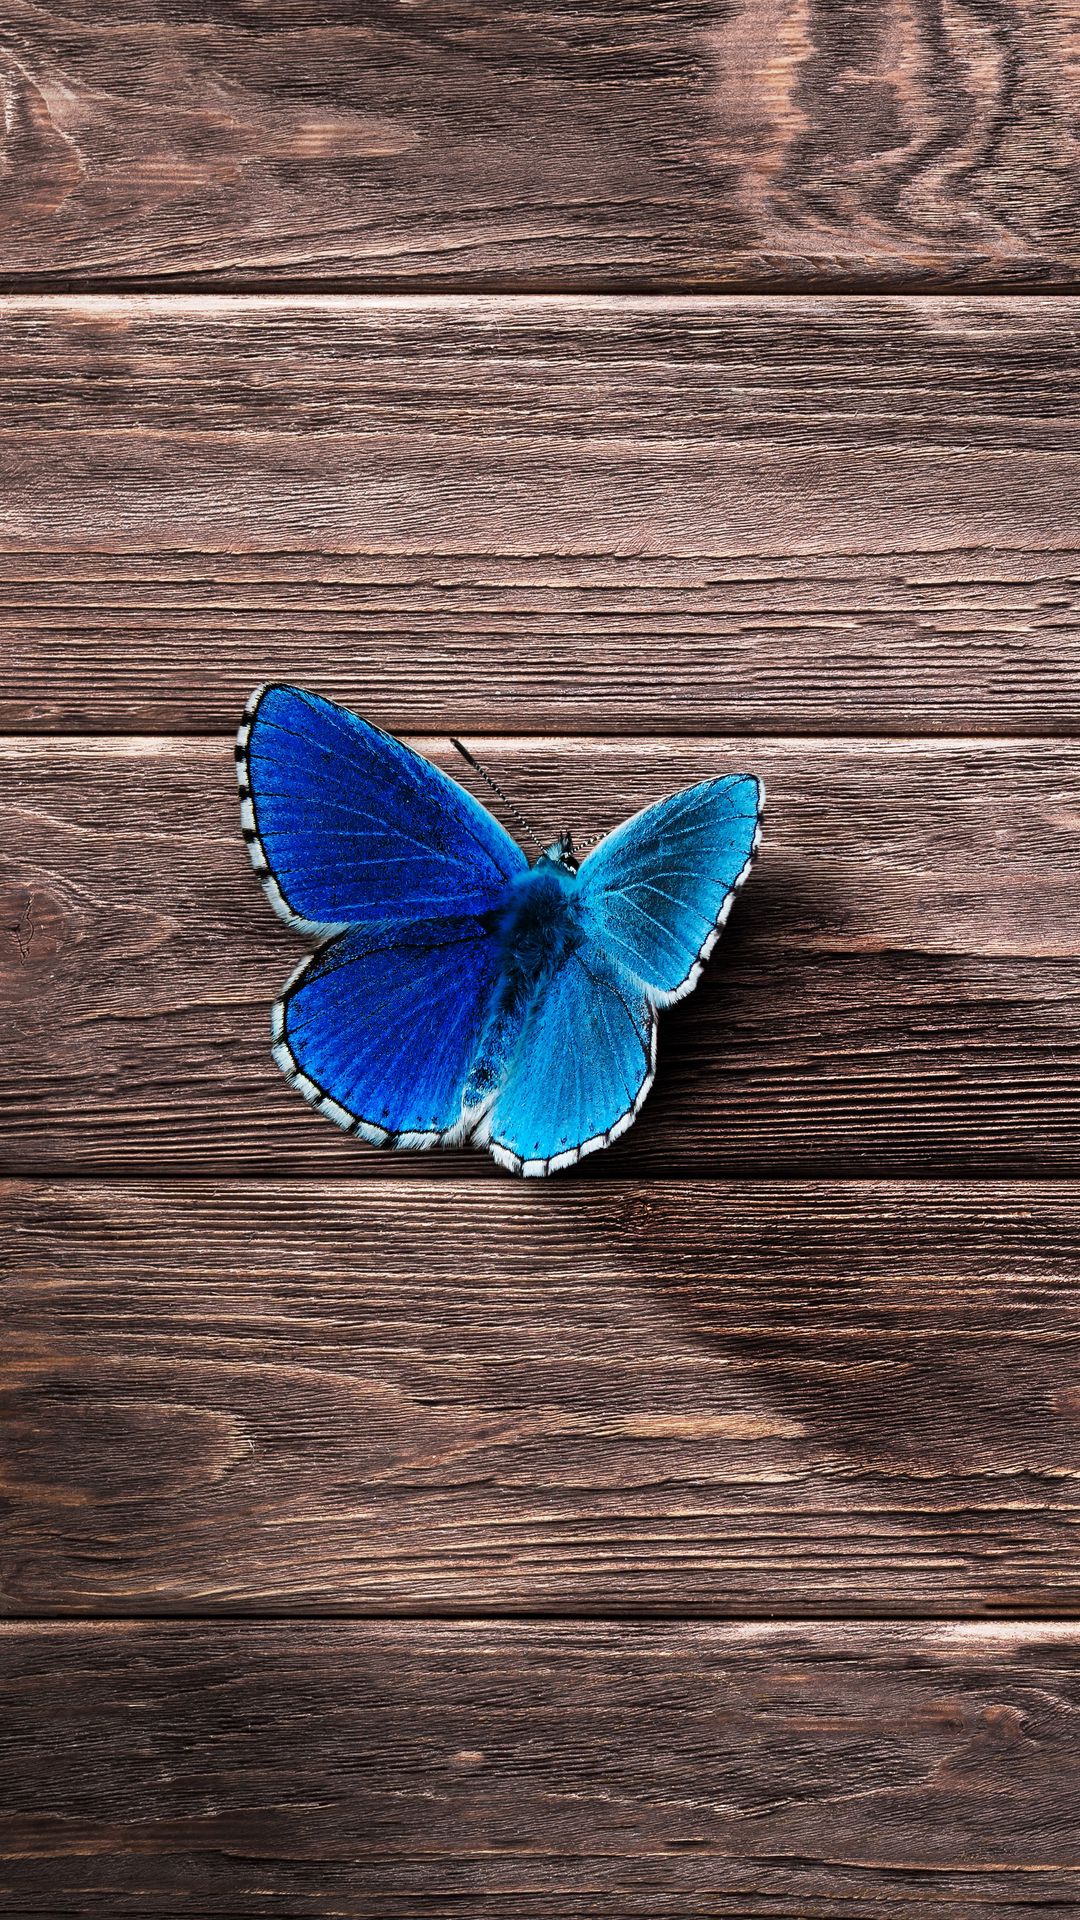 1080x1920 Wallpaper butterfly, surface, wooden